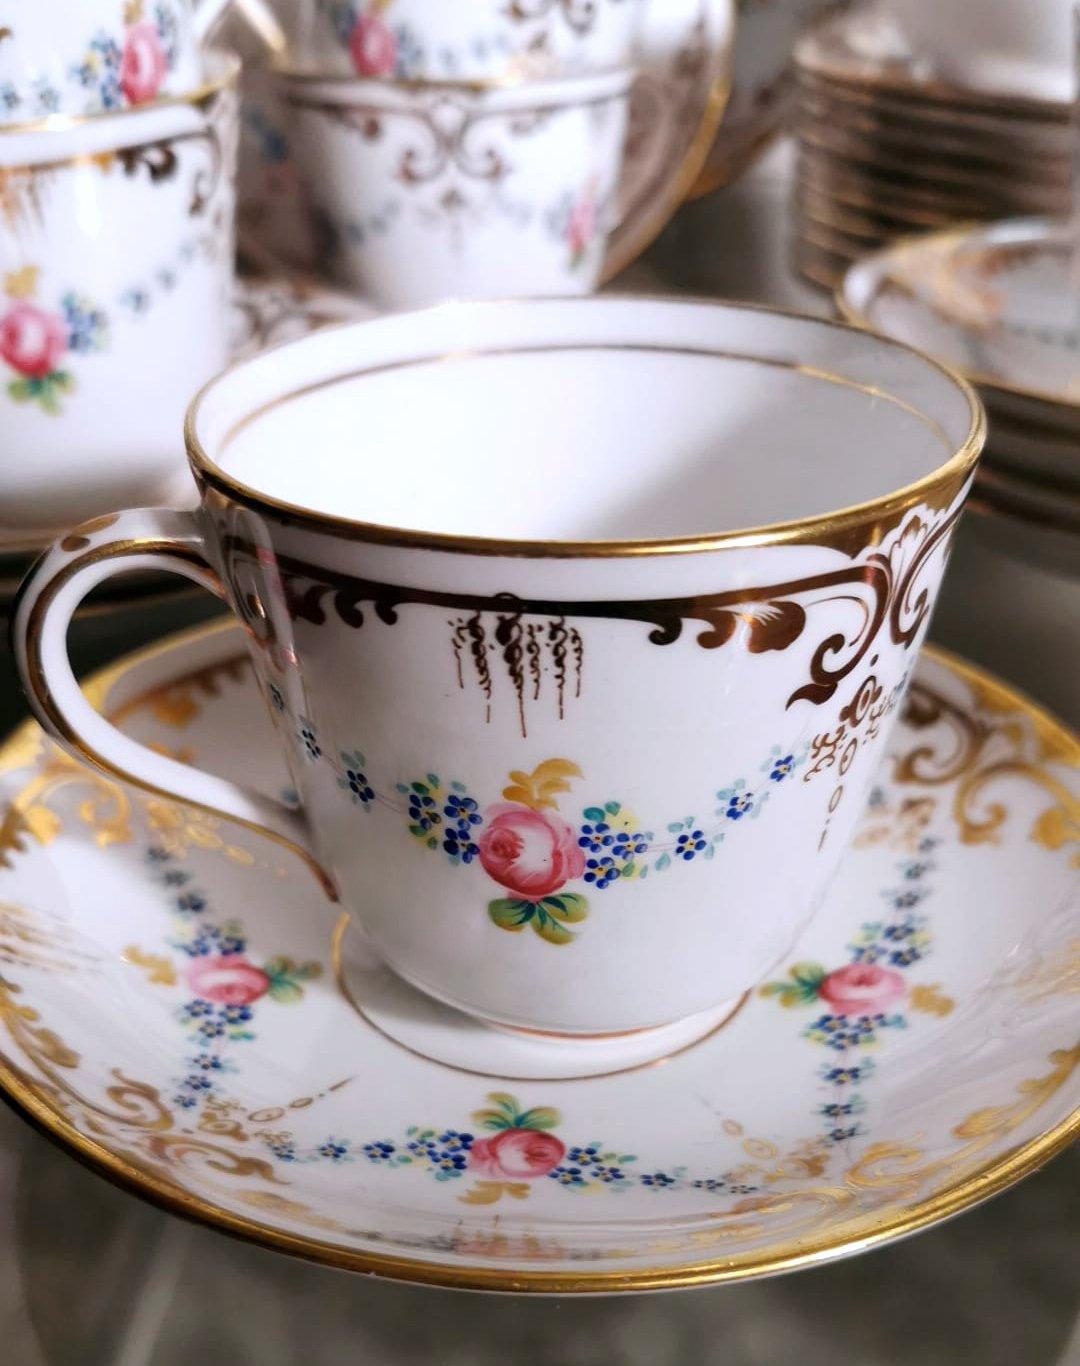 20th Century Napoleon III Style Porcelain De Paris Coffee/Tea Service For 12 People-28 Pieces For Sale